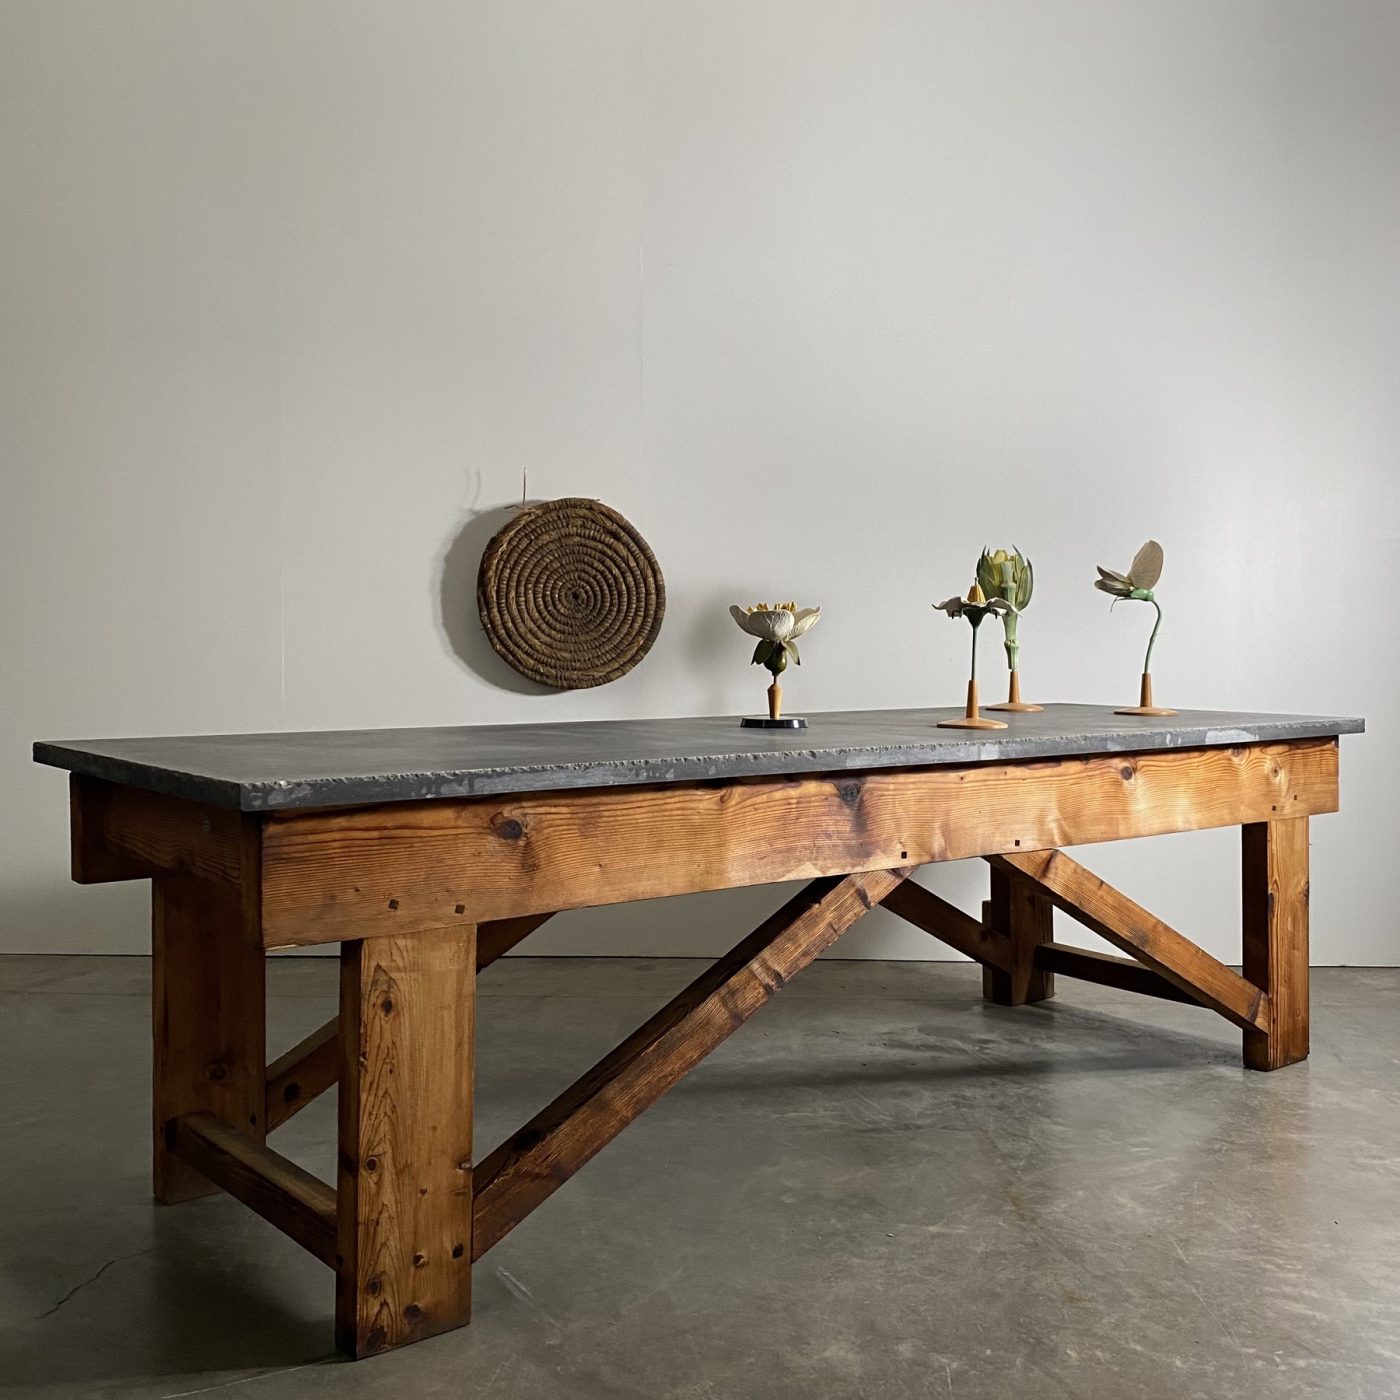 objet-vagabond-stone-table0010